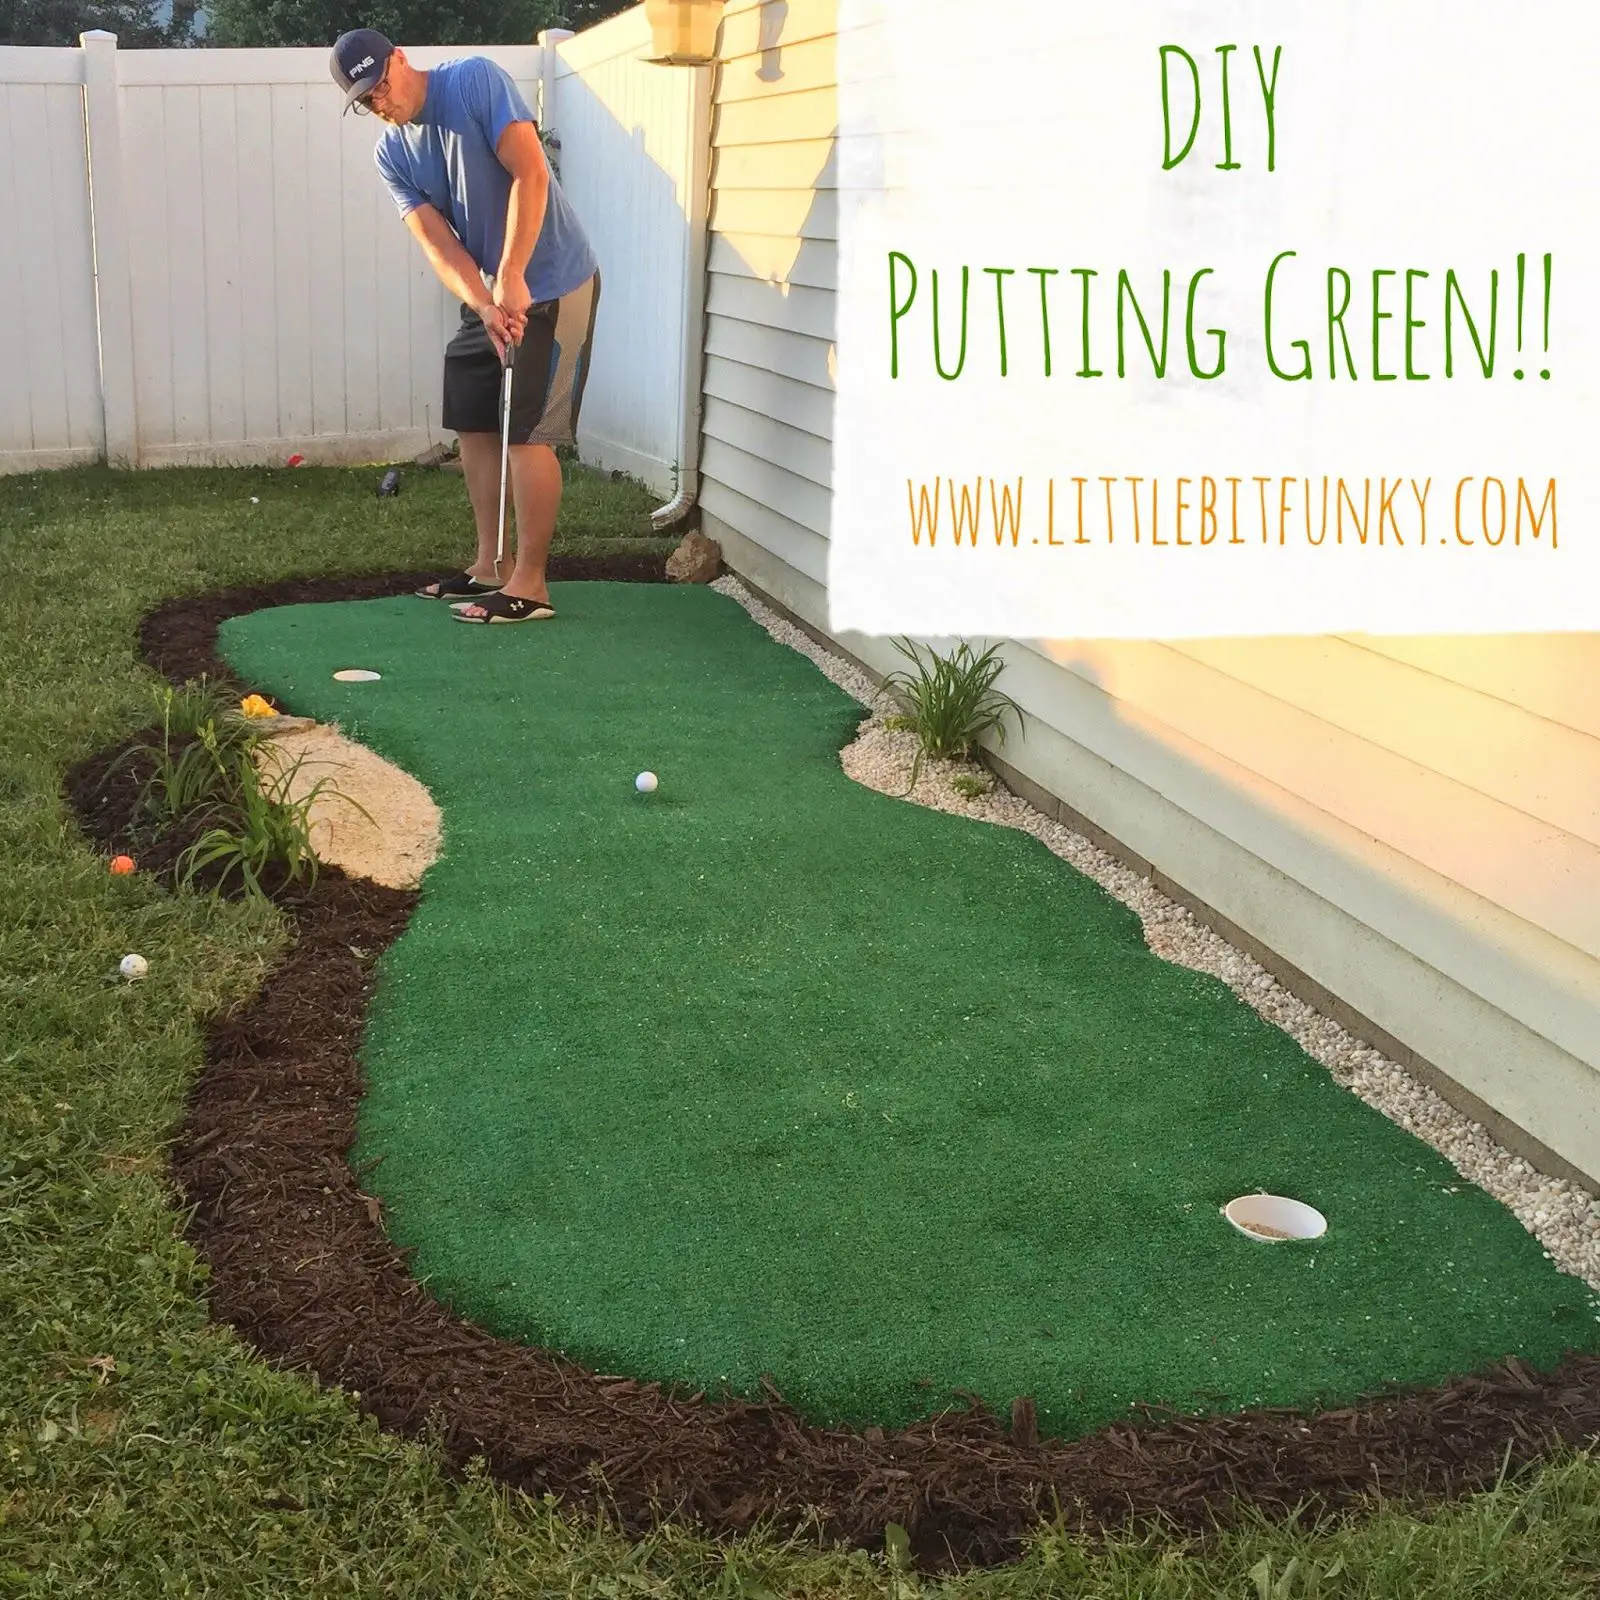 Little Bit Funky: How to make a backyard putting green! {DIY putting ...